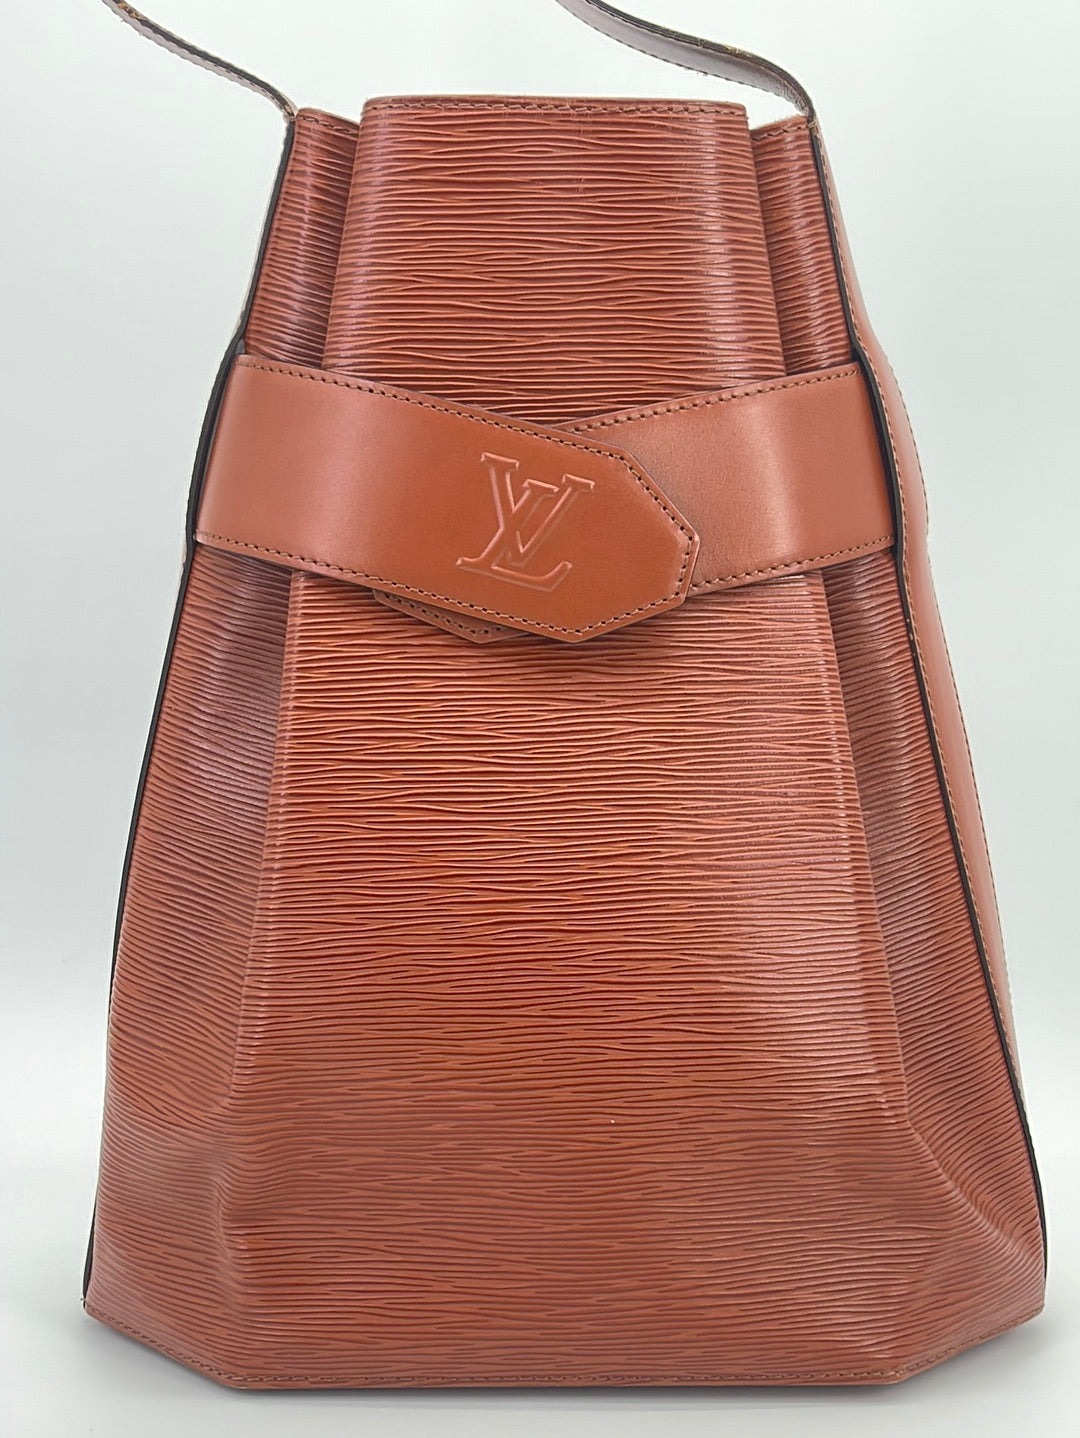 Cra-wallonieShops Revival  Louis Vuitton shoulder bag in brown